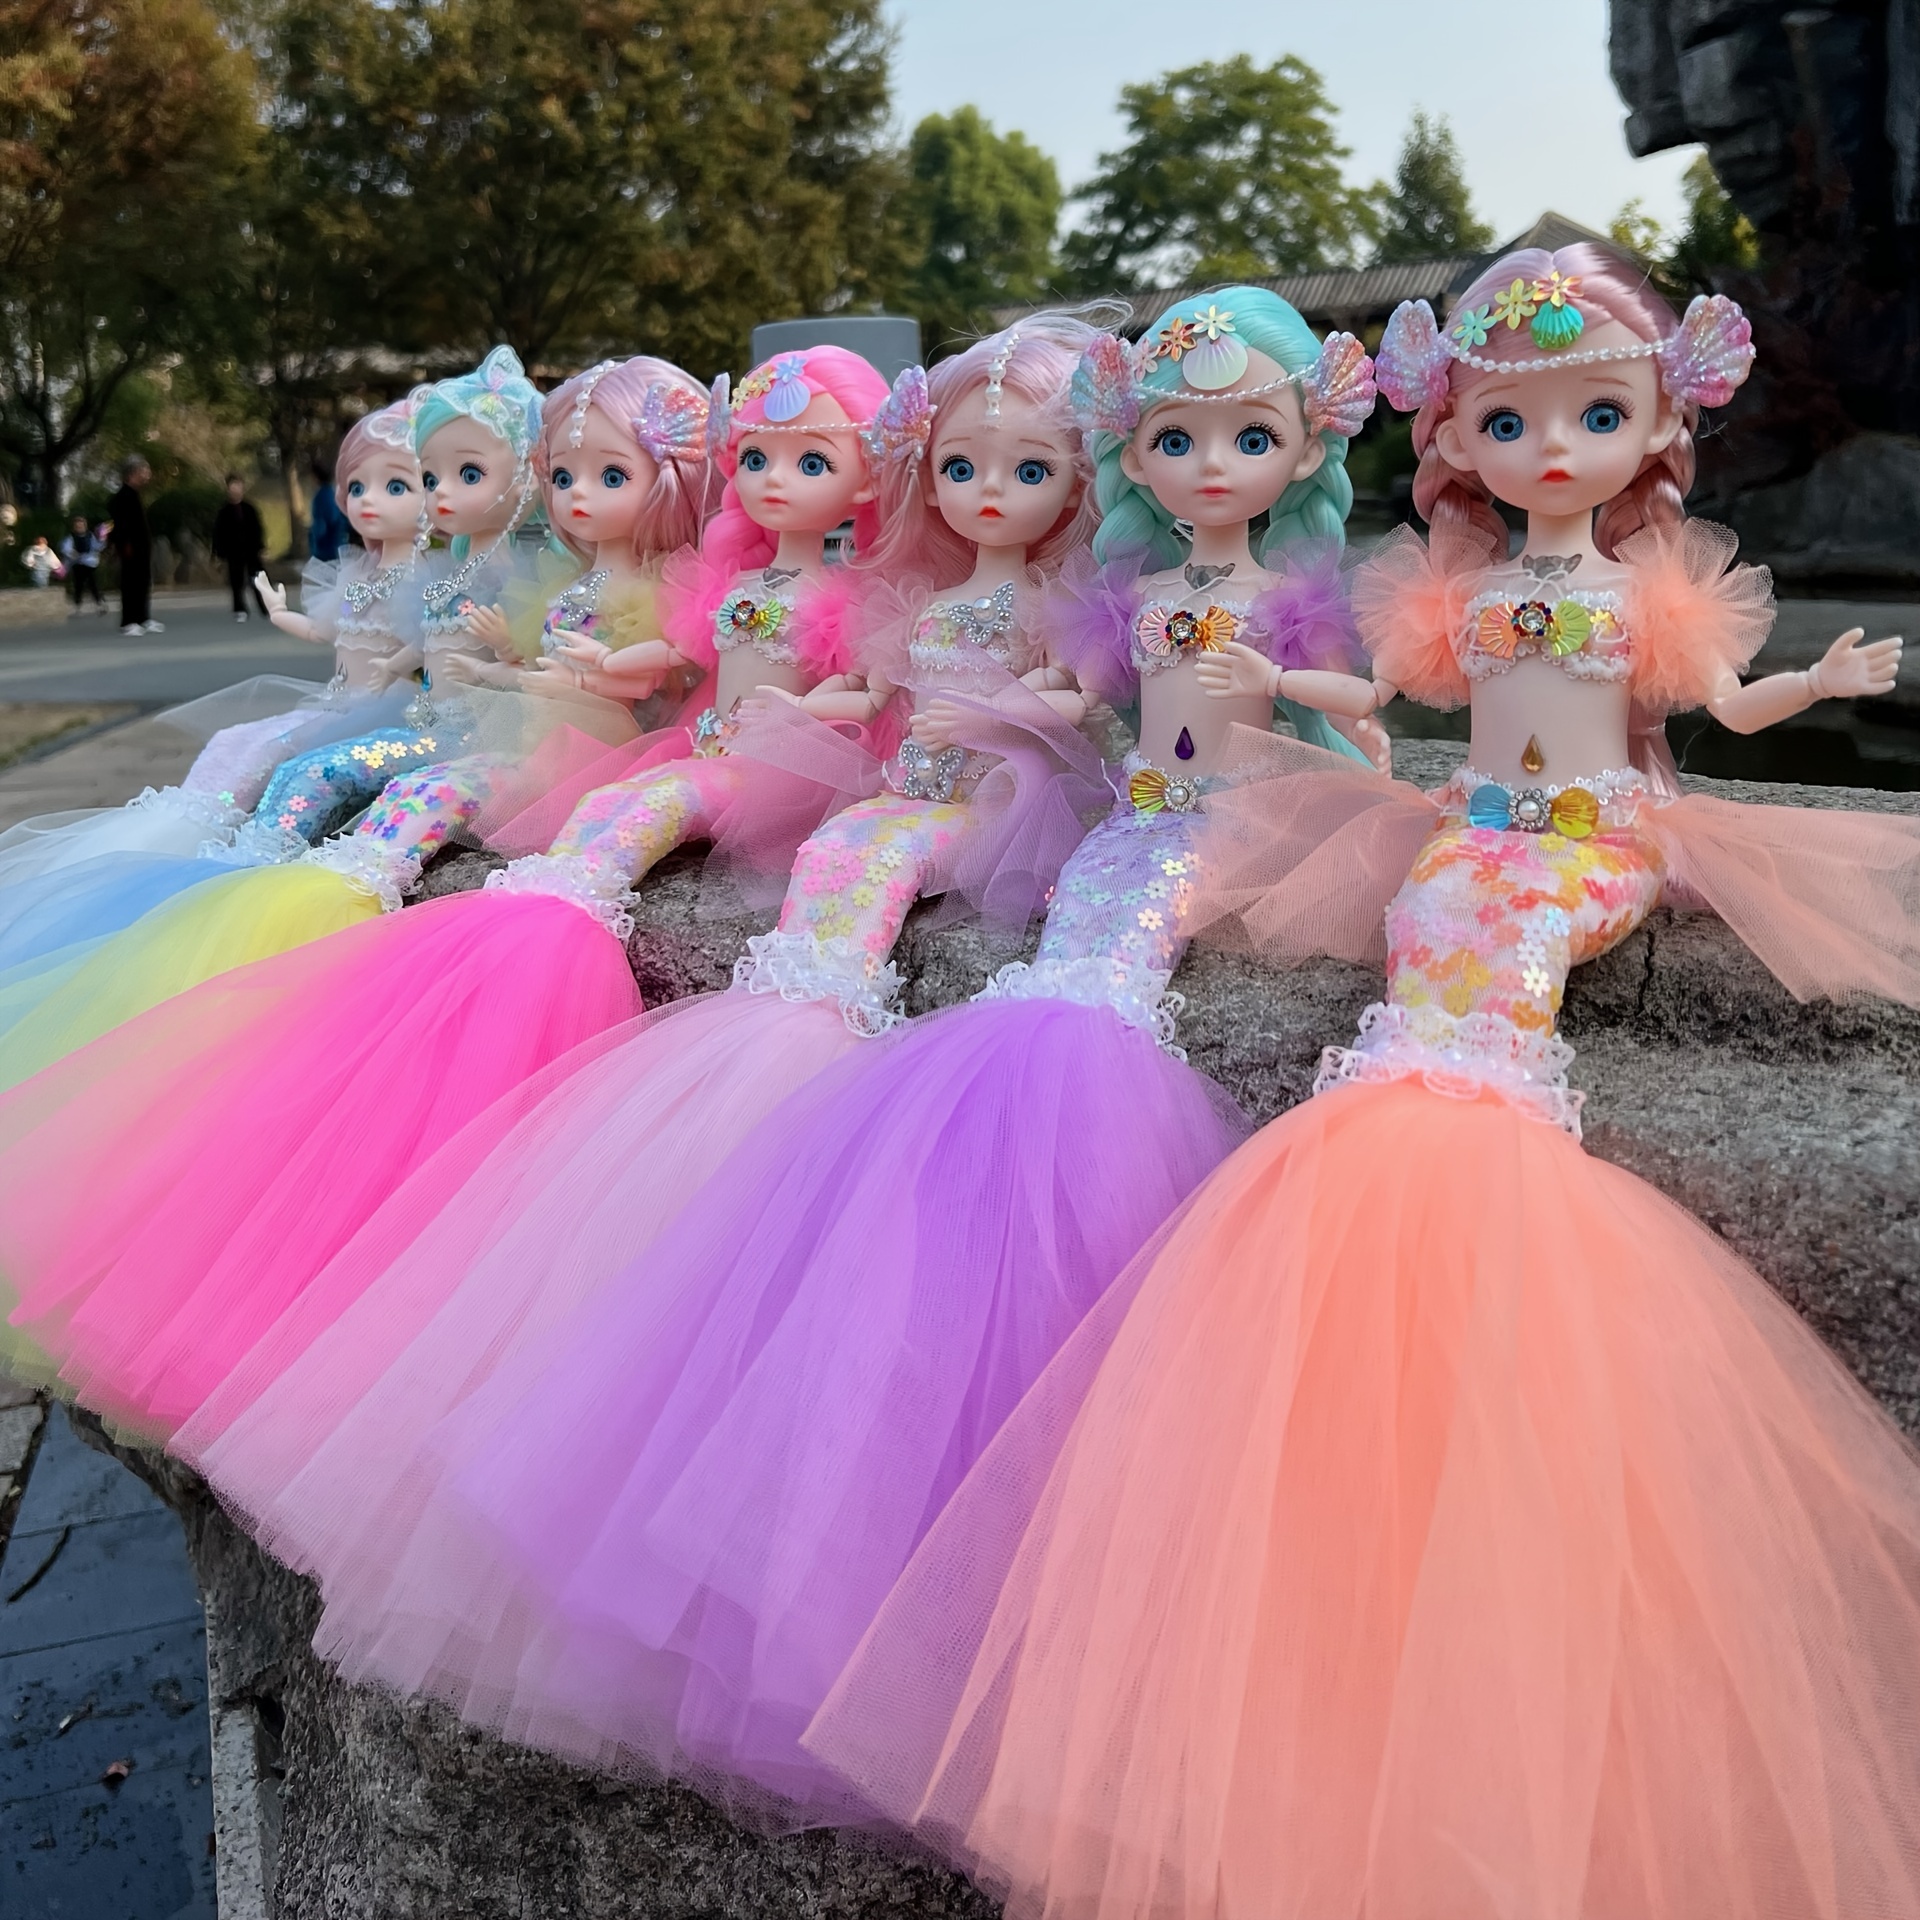 Fun Costumes Pink Doll Wig Standard